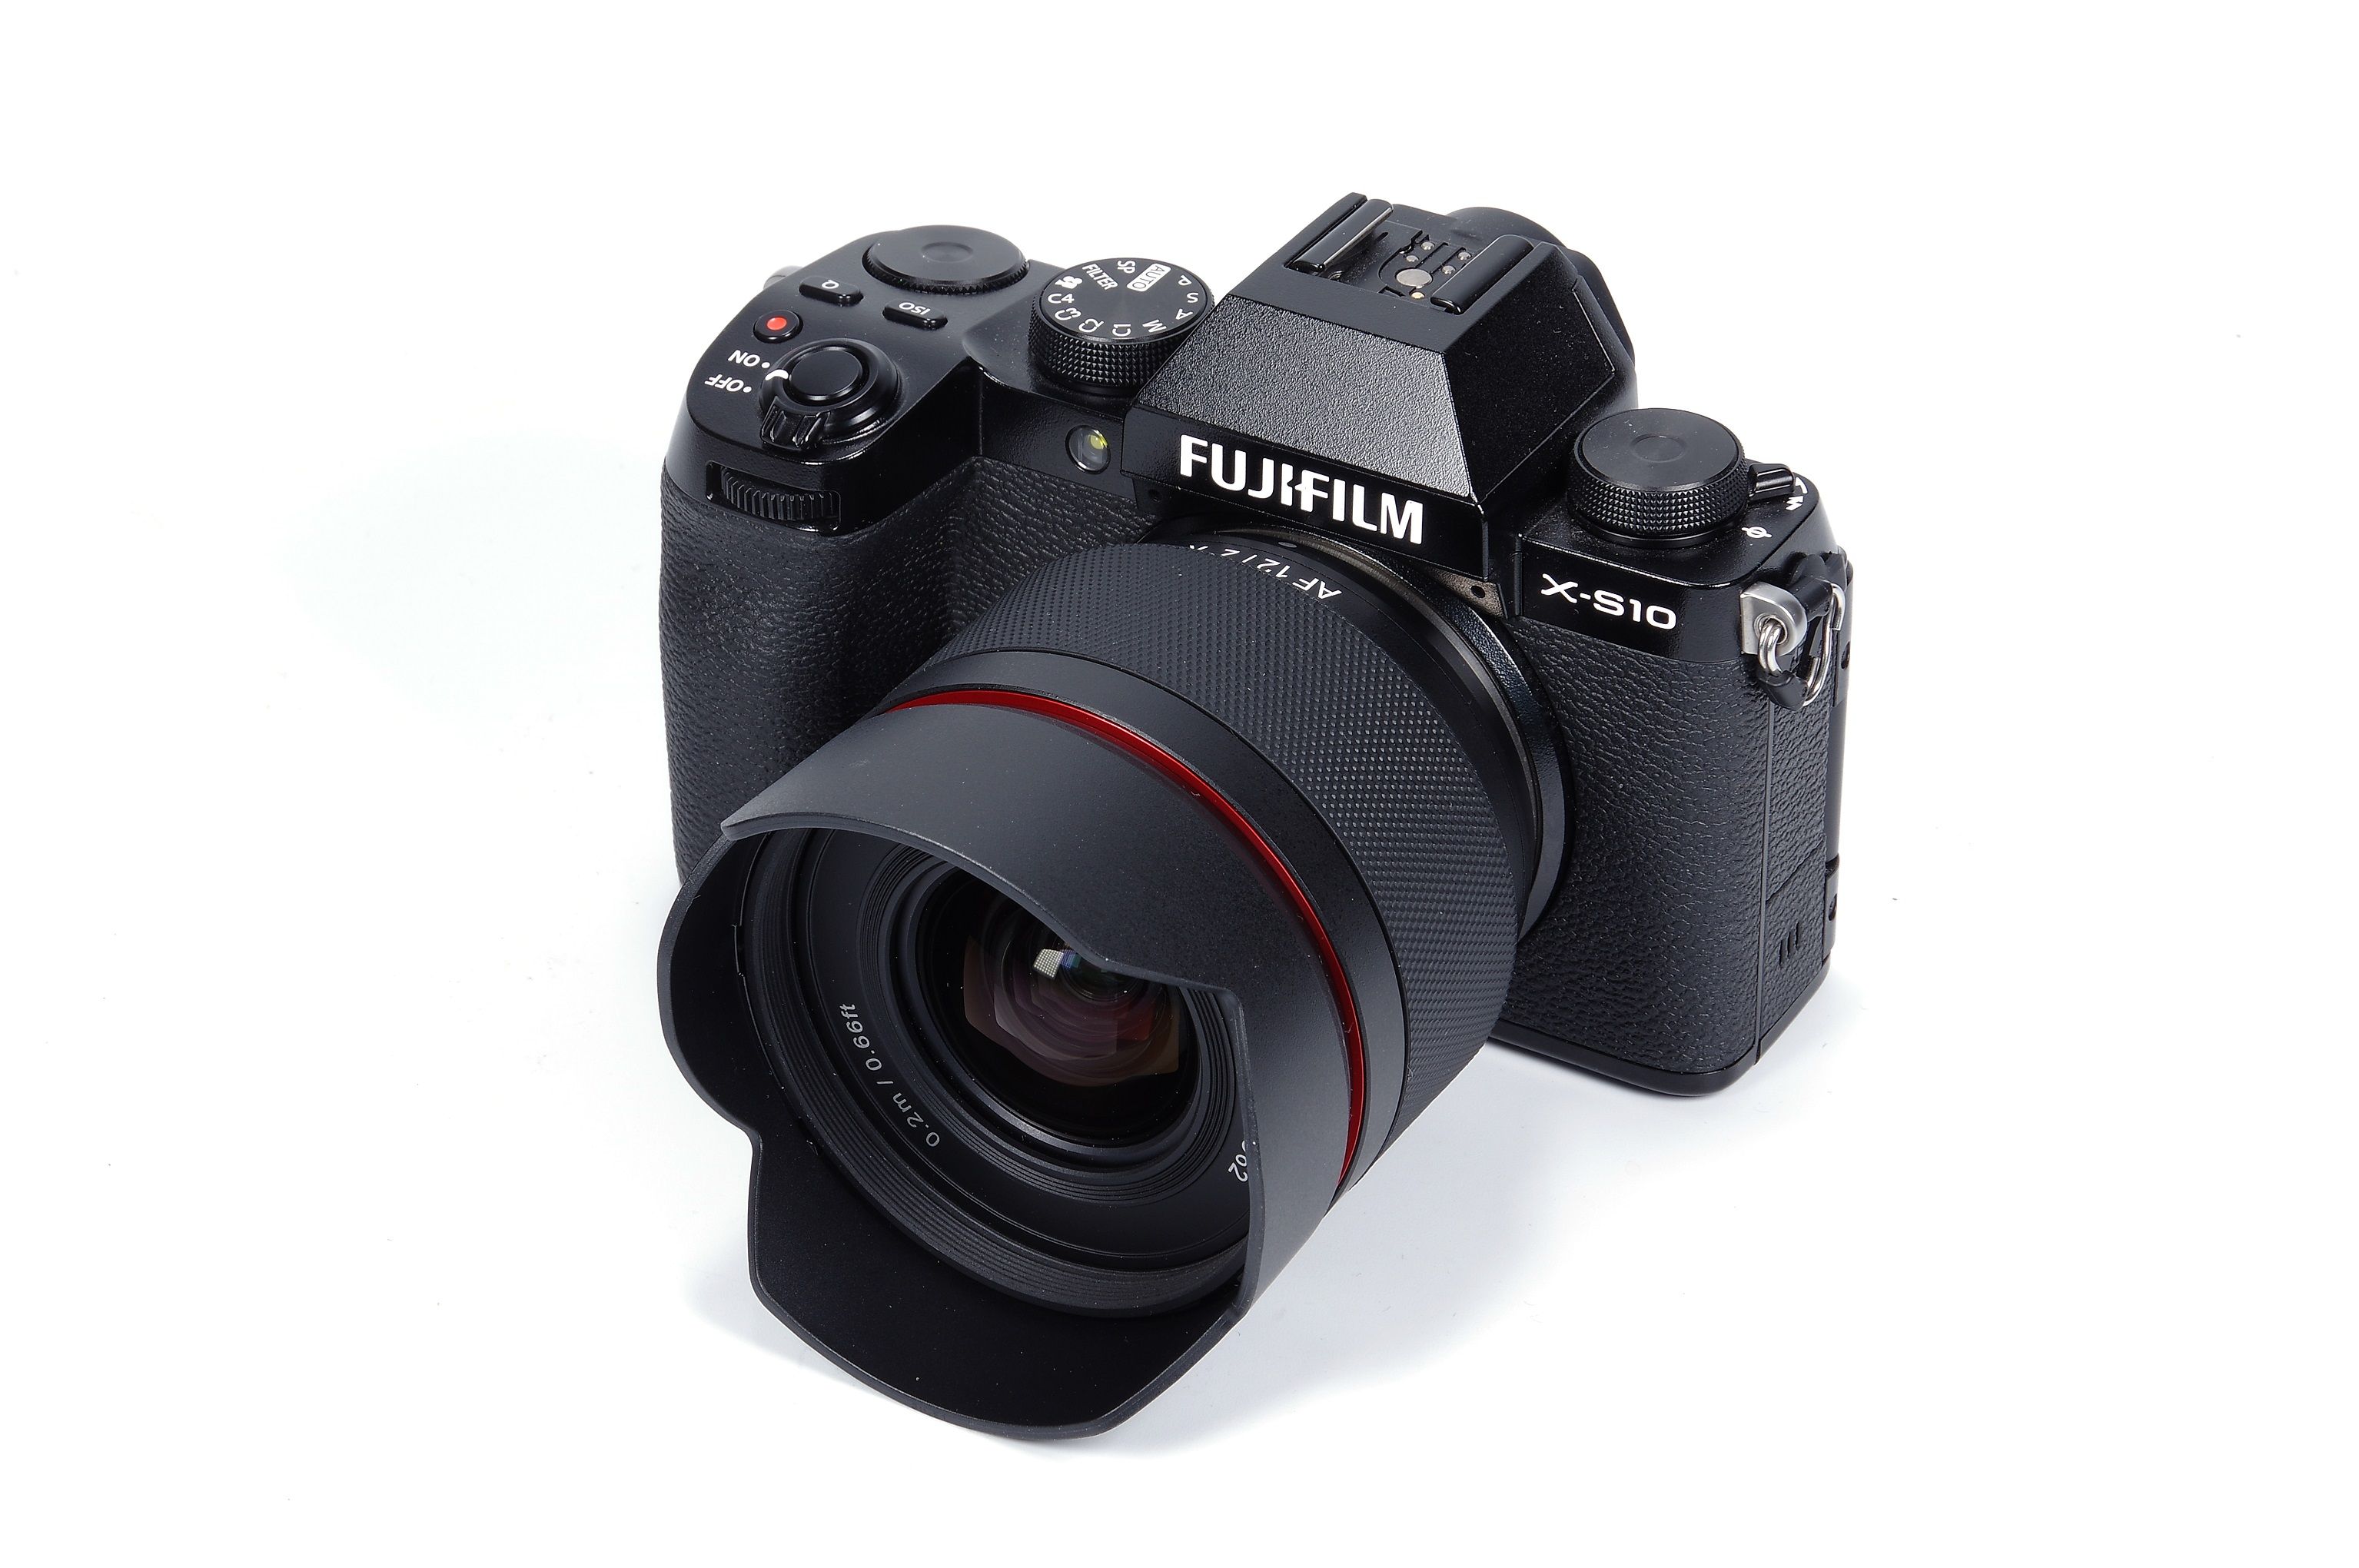 Highres Samyang 12mm F2 With Hood on Fujifilm X S10 1641123953